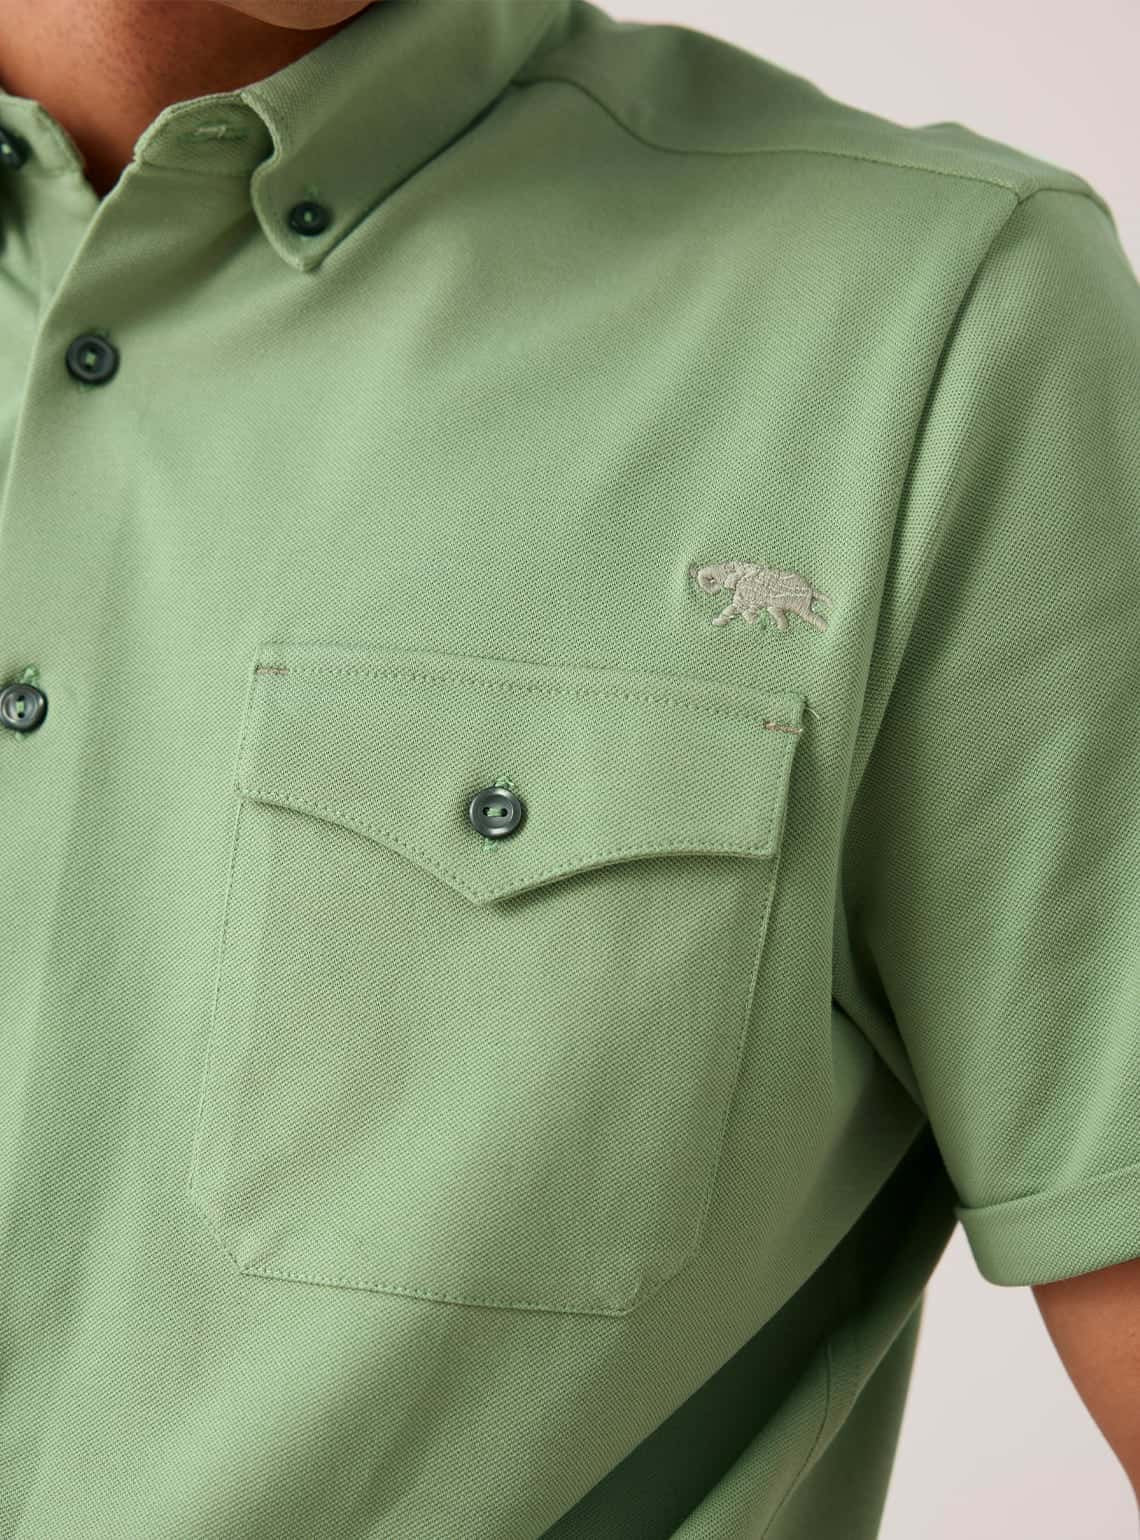 Buy Garden Knit Shirt, Semi casual Green Solids Shirts for Men Online